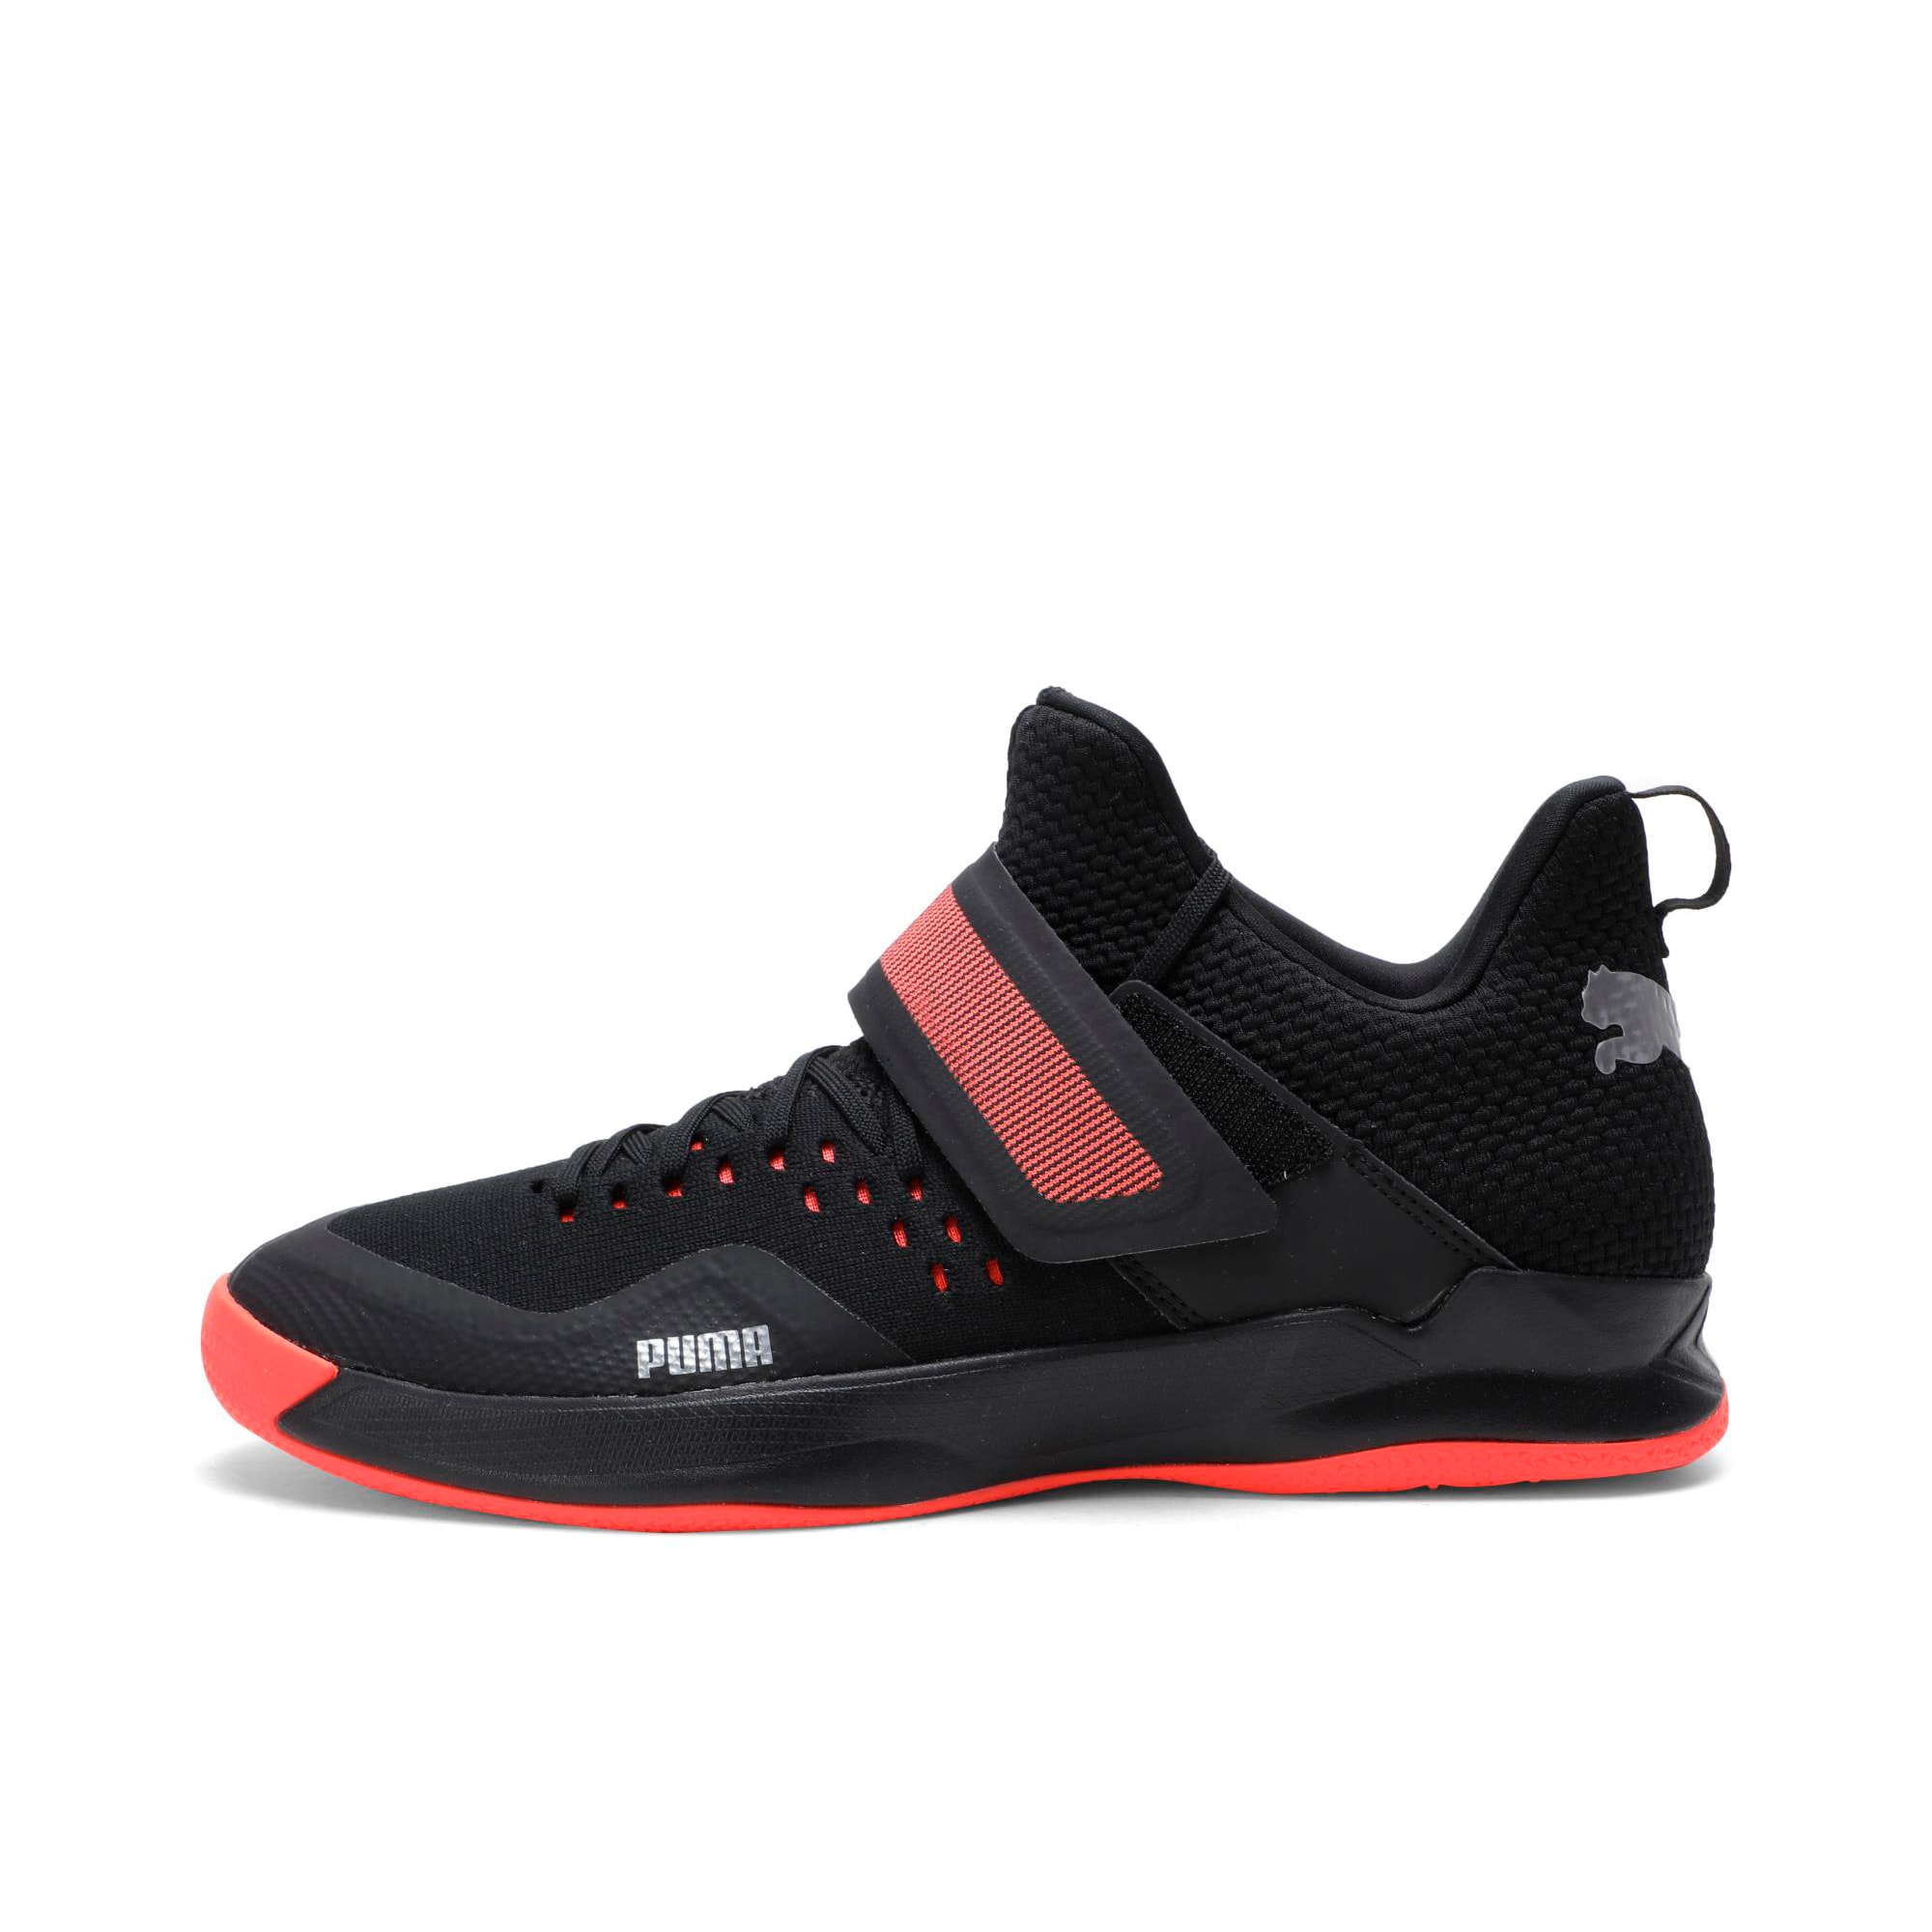 Rise XT NETFIT 2 Shoes | Puma Black-Silver-Nrgy Red | PUMA Shoes | PUMA